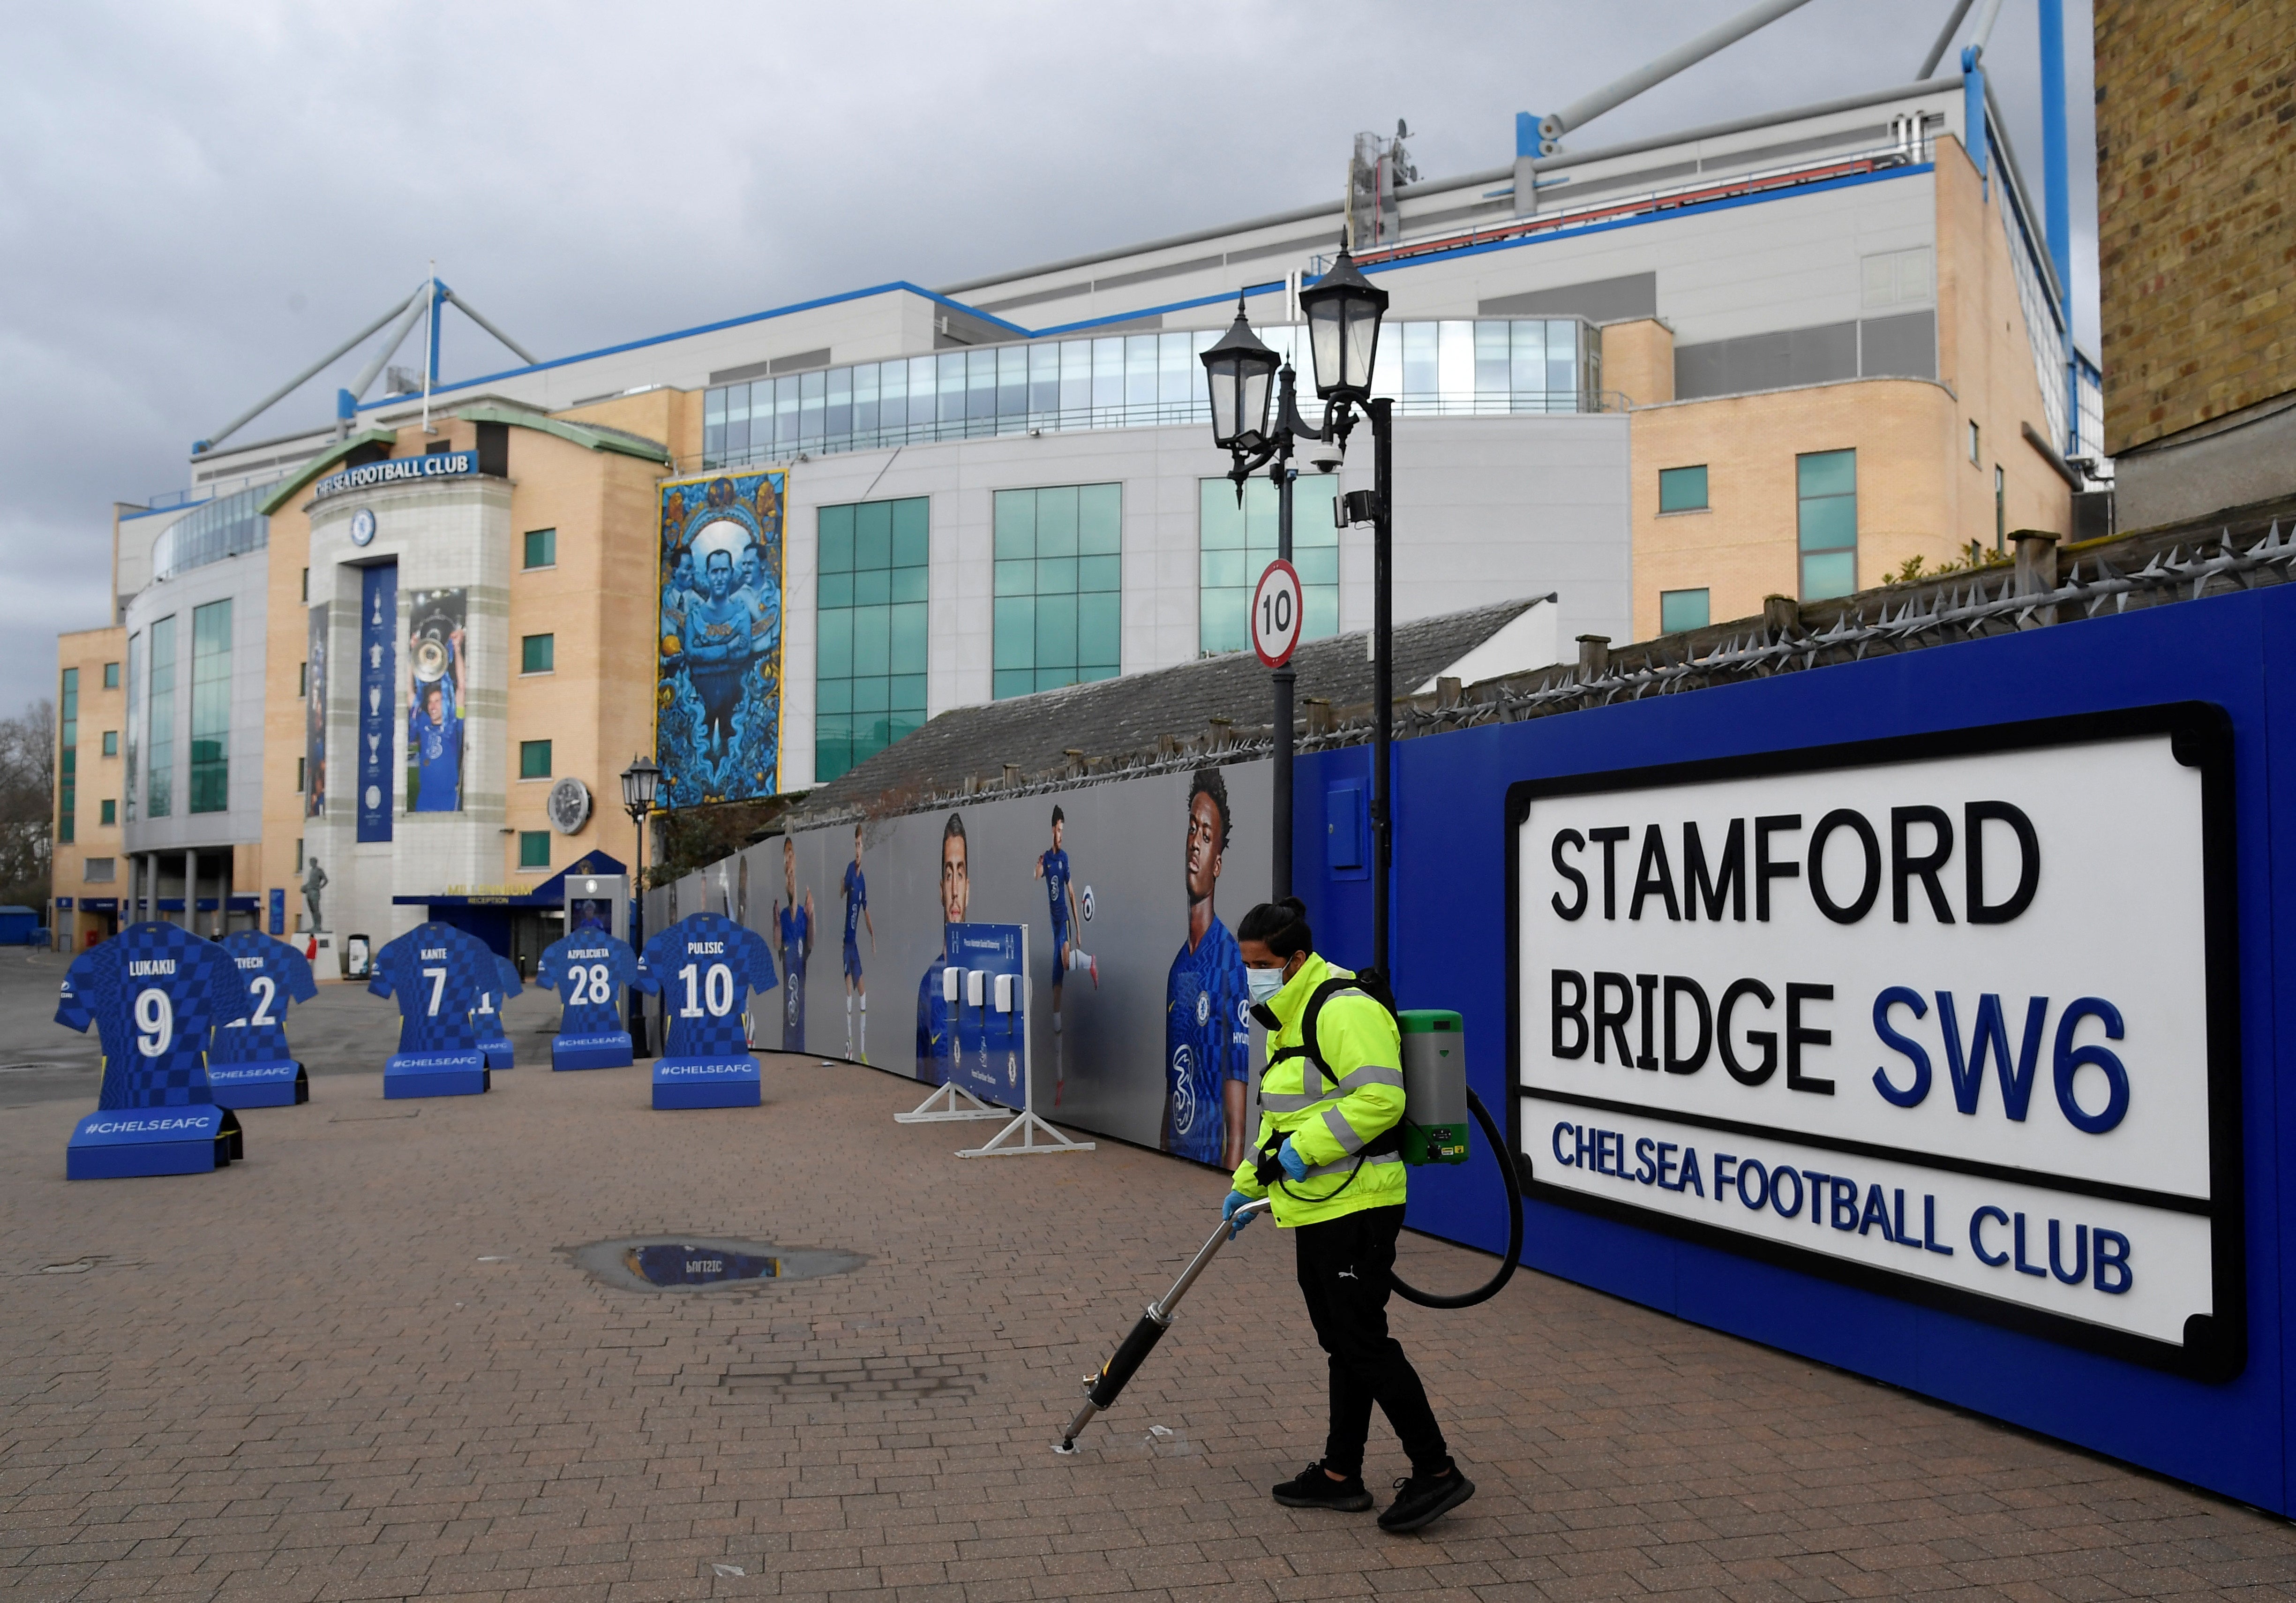 Stamford Bridge, the home of Chelsea Football Club